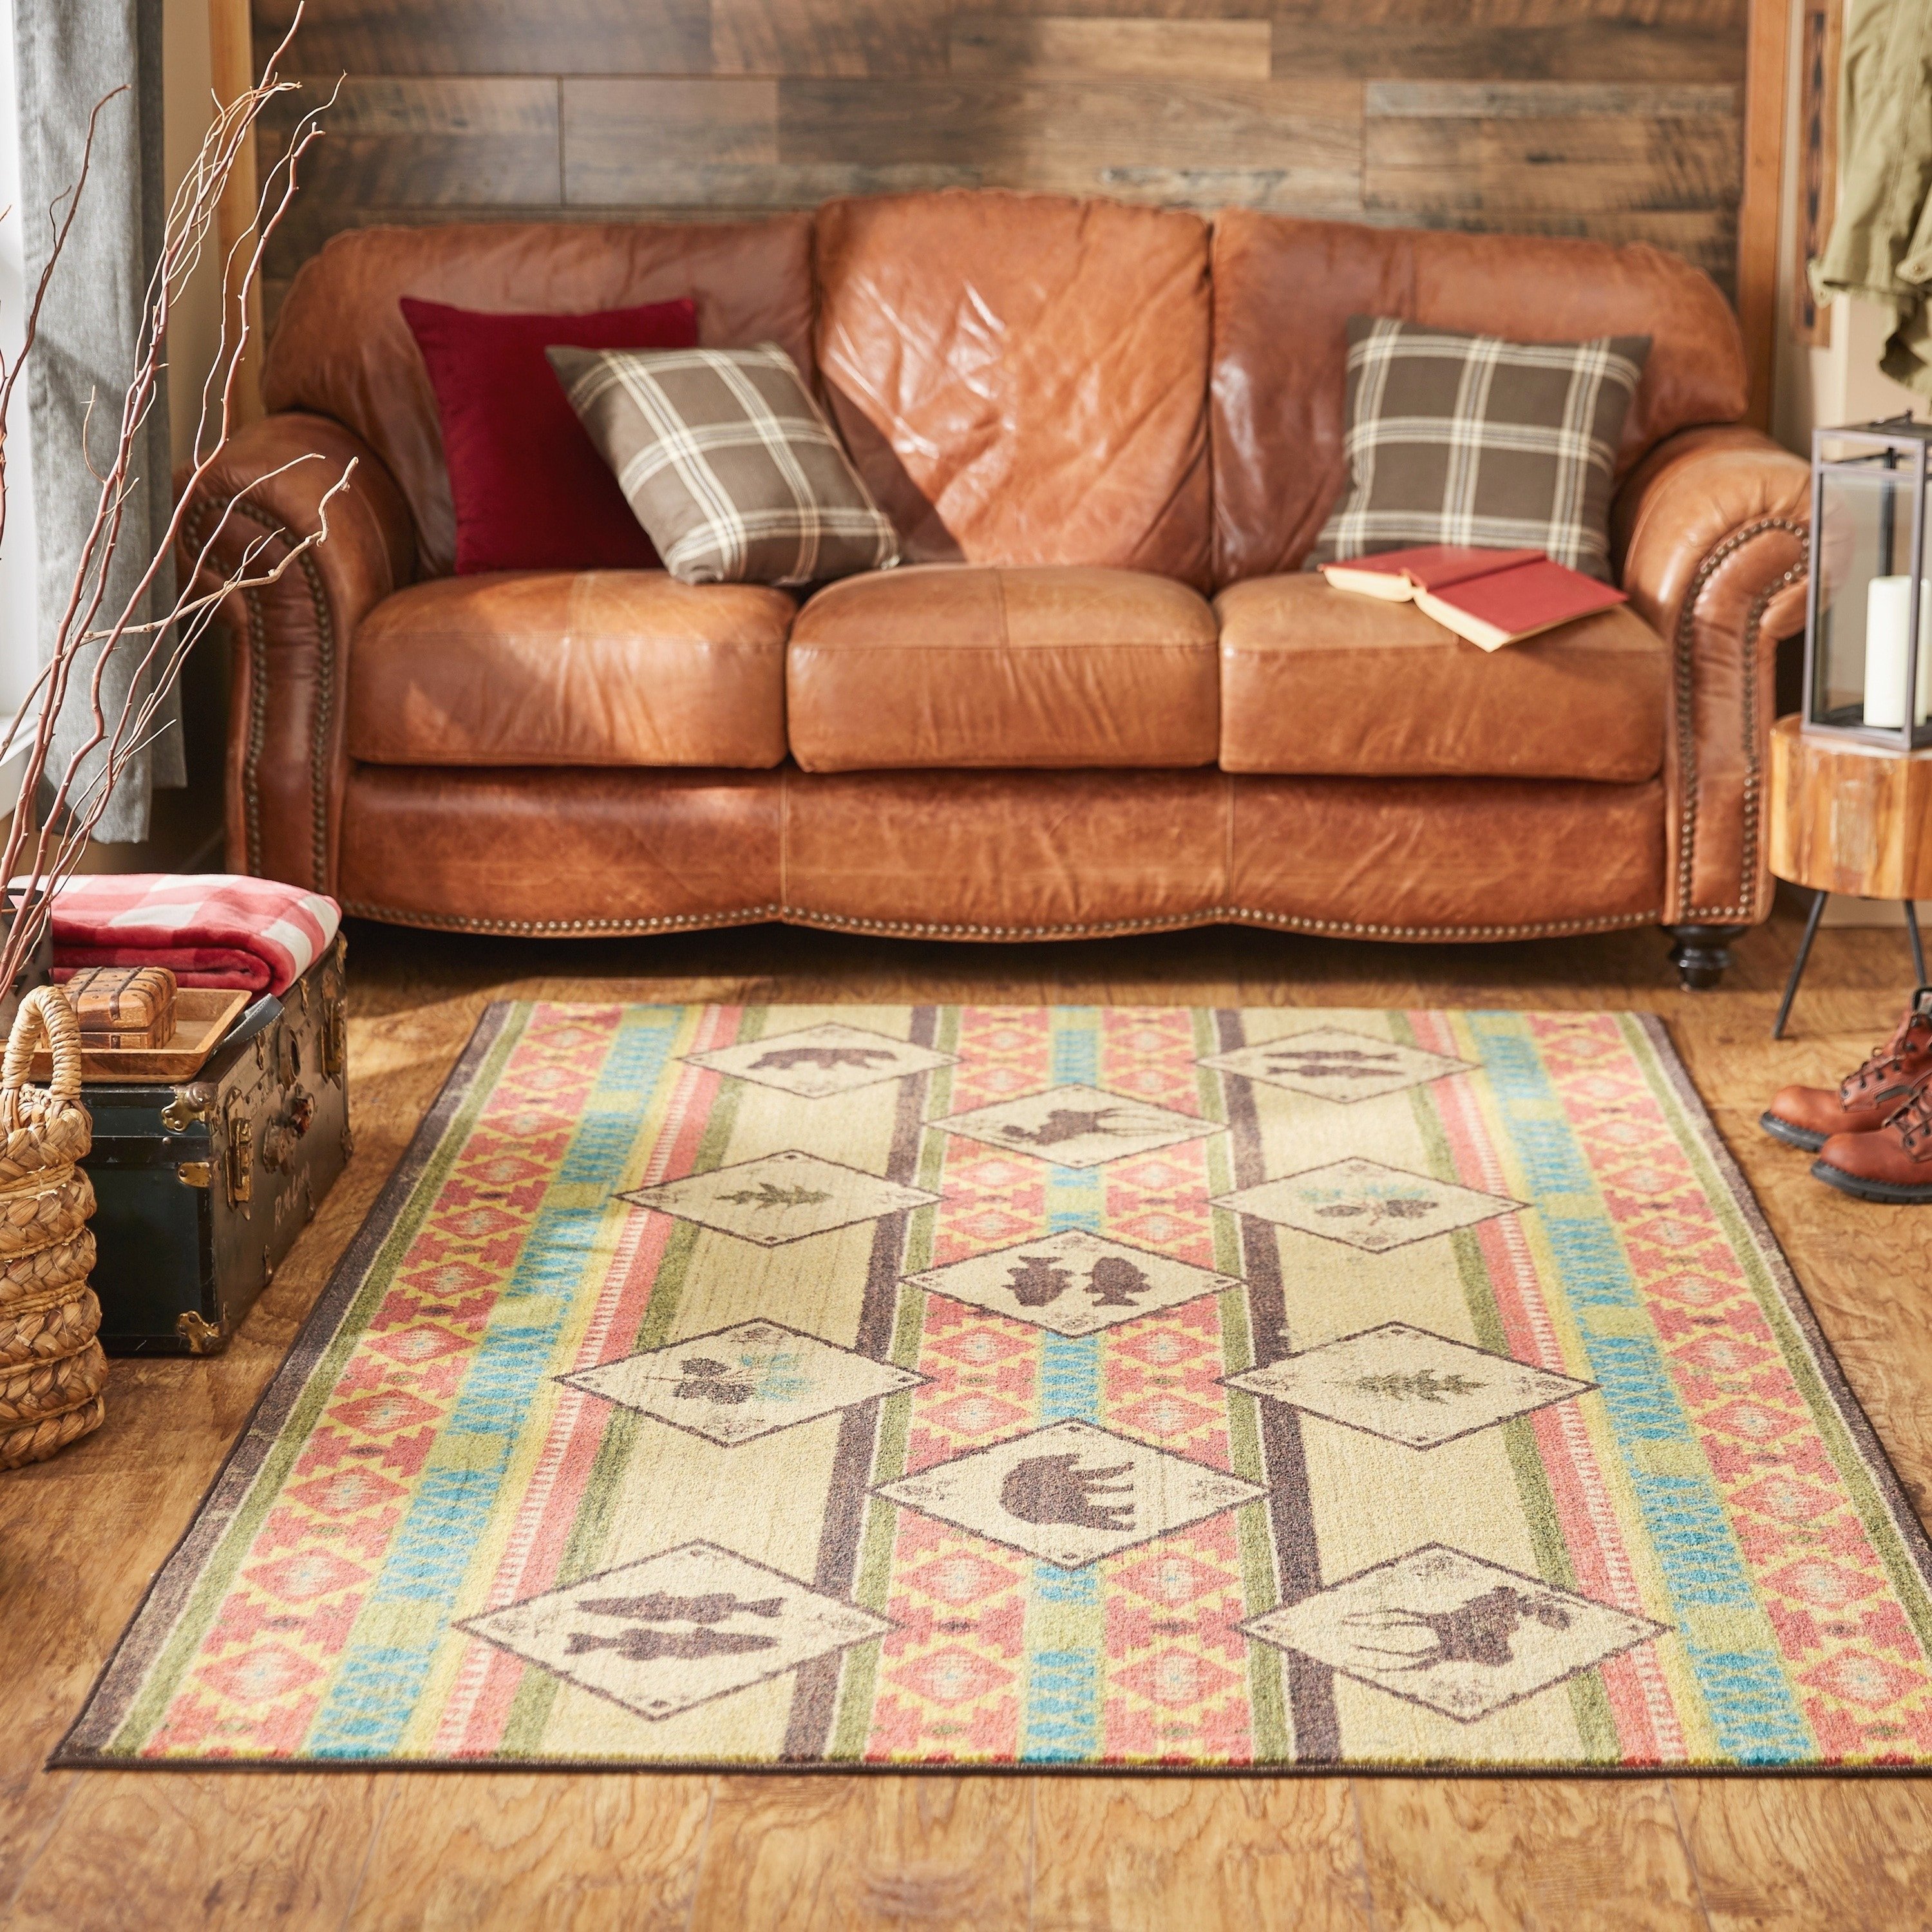 Area Rug for Bedroom Fresh 13 Fashionable Carpet or Hardwood Floors In Living Room